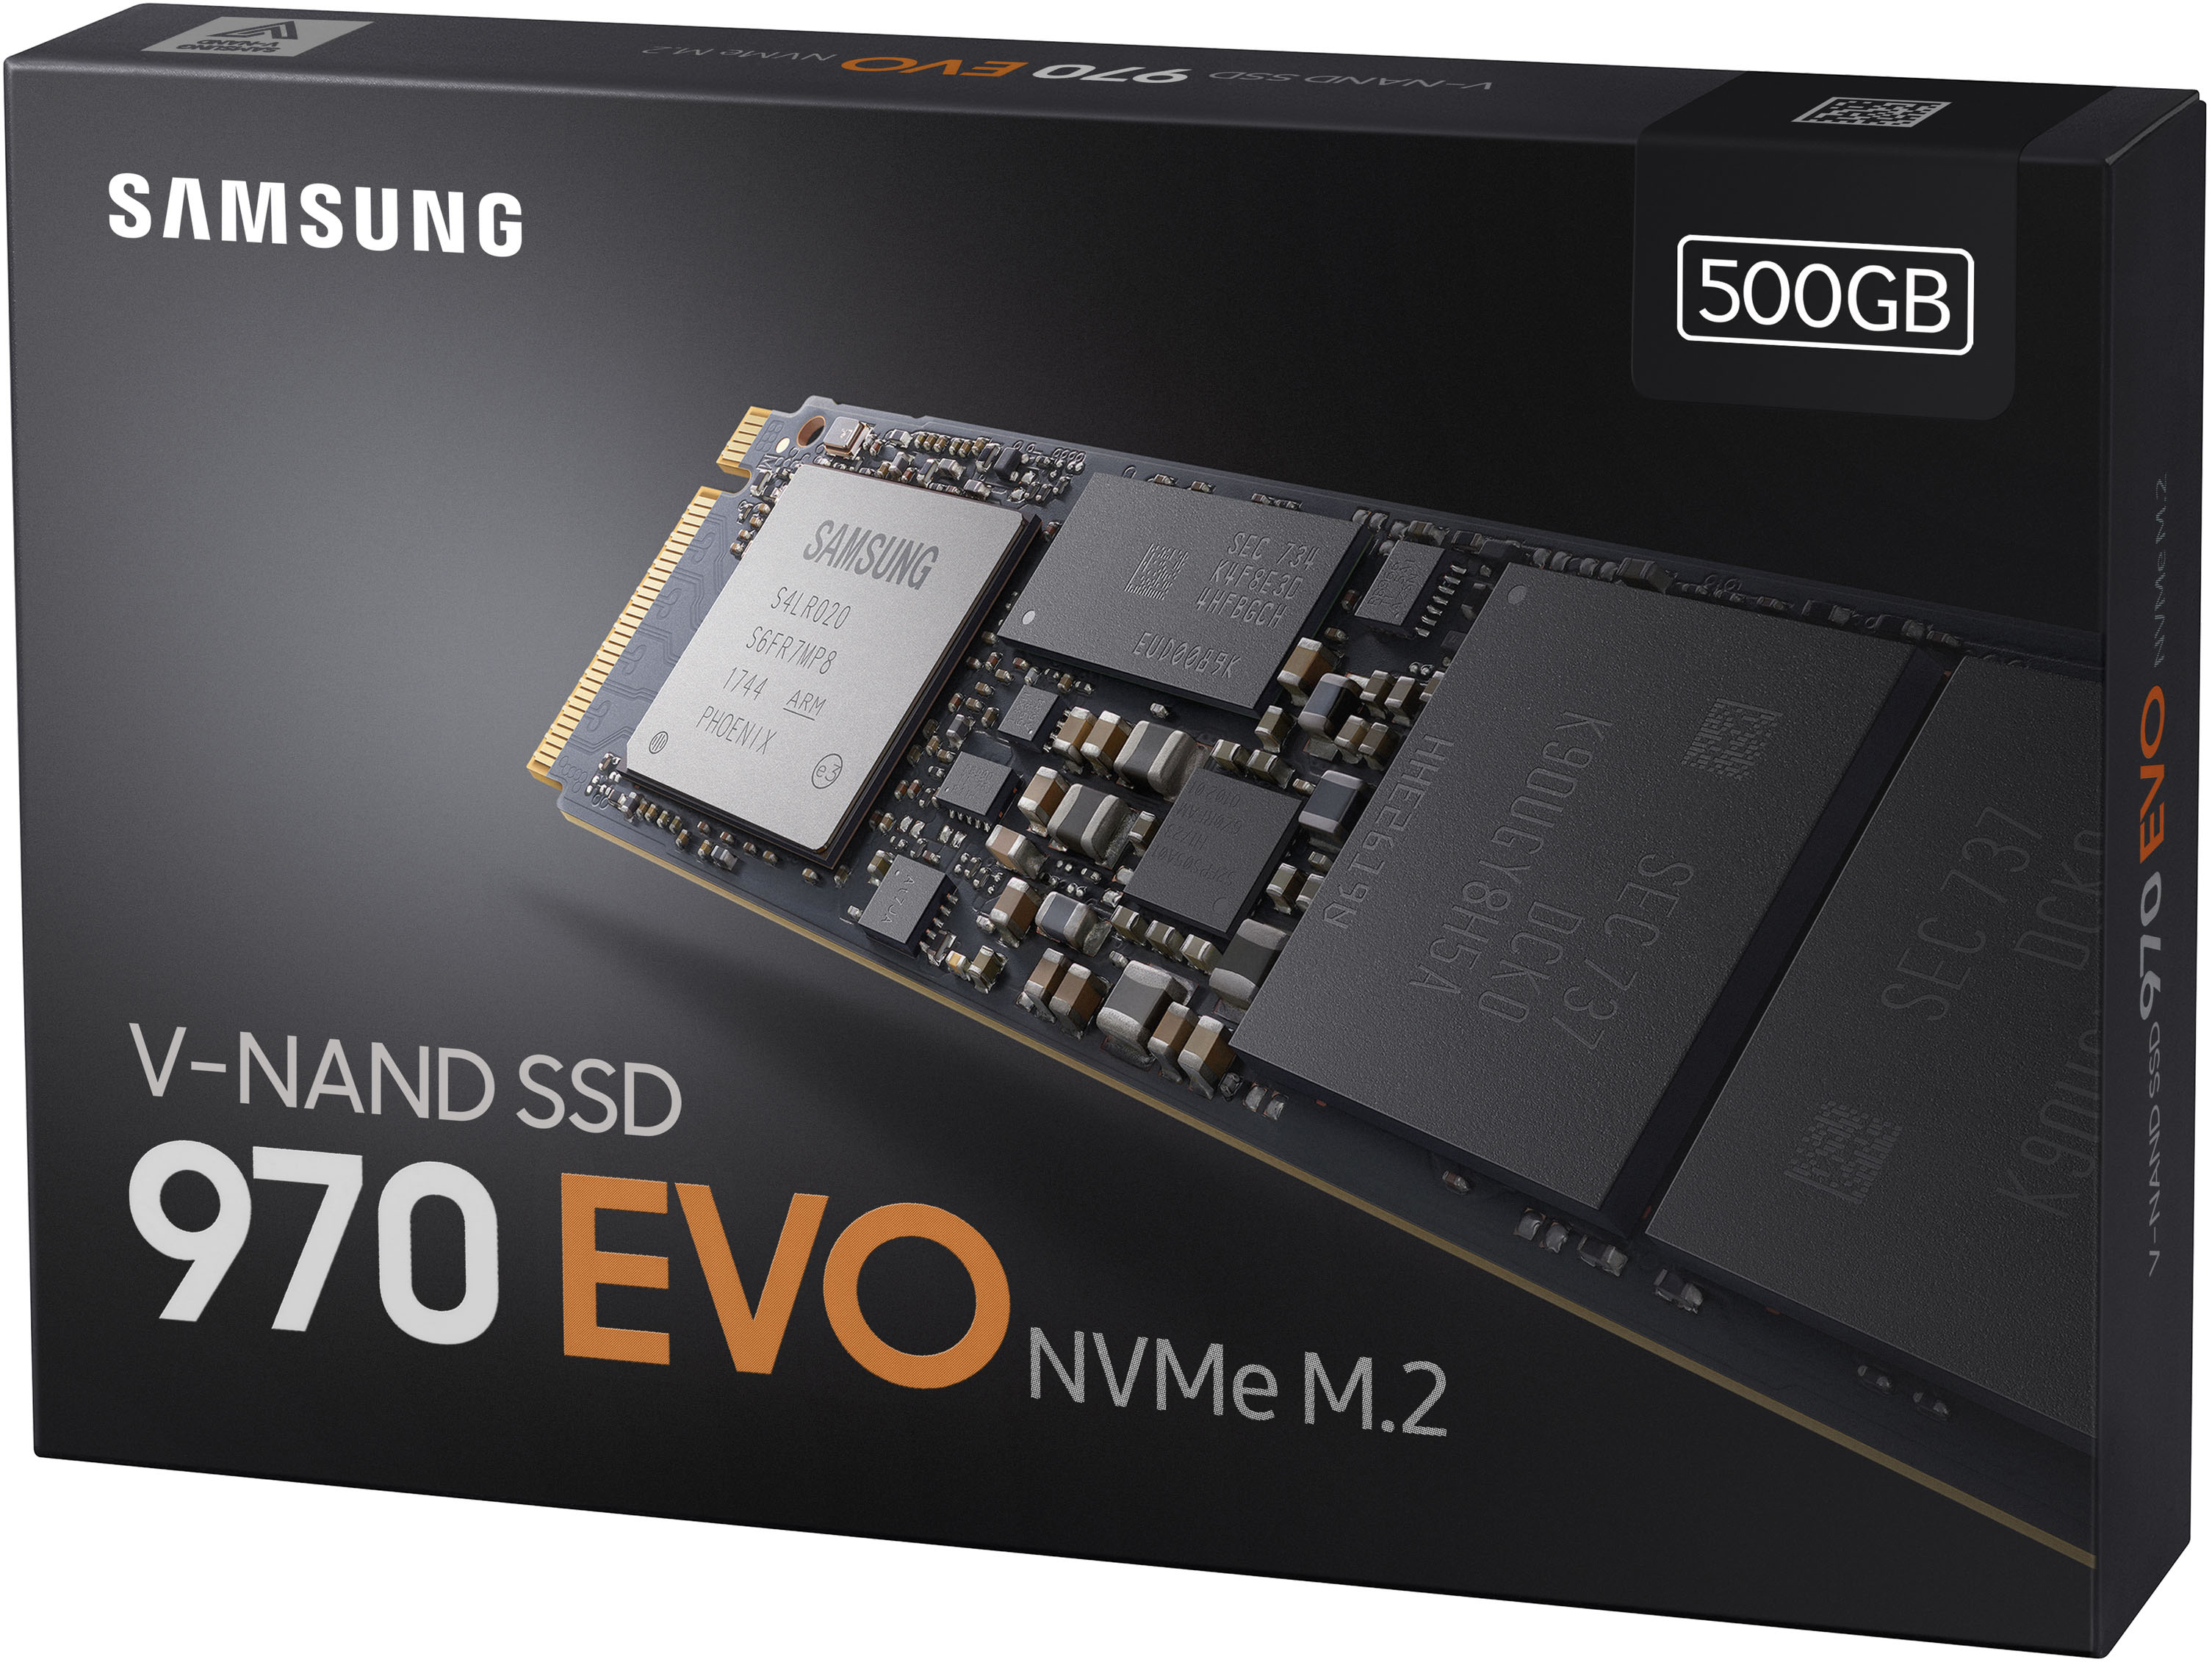 M.2 500 970 intern SSD SAMSUNG EVO Festplatte NVMe, GB Retail, via